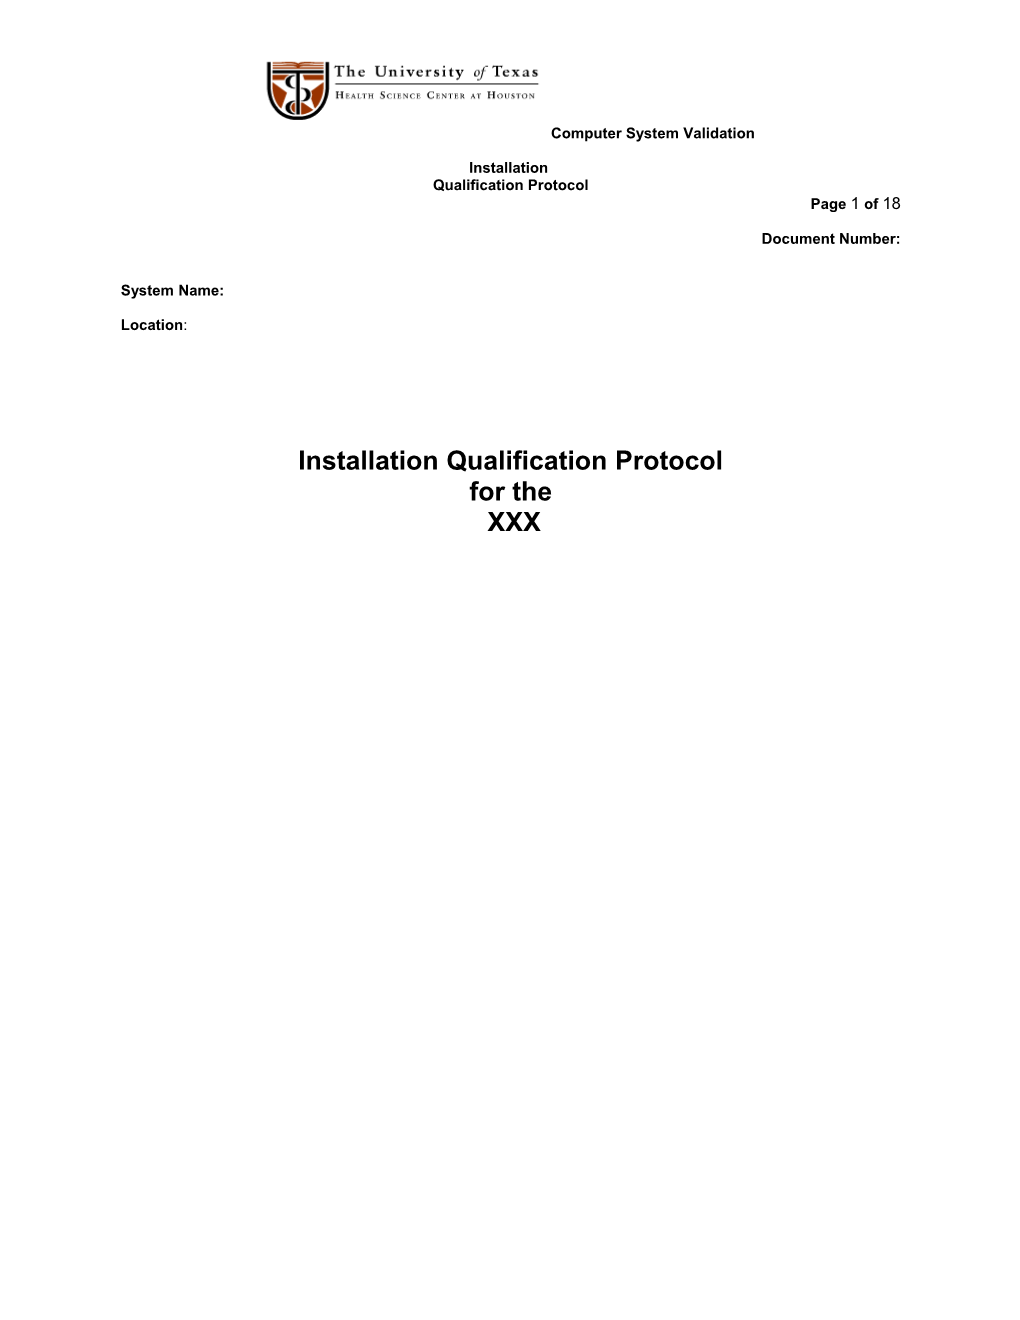 Installation Qualification Protocol